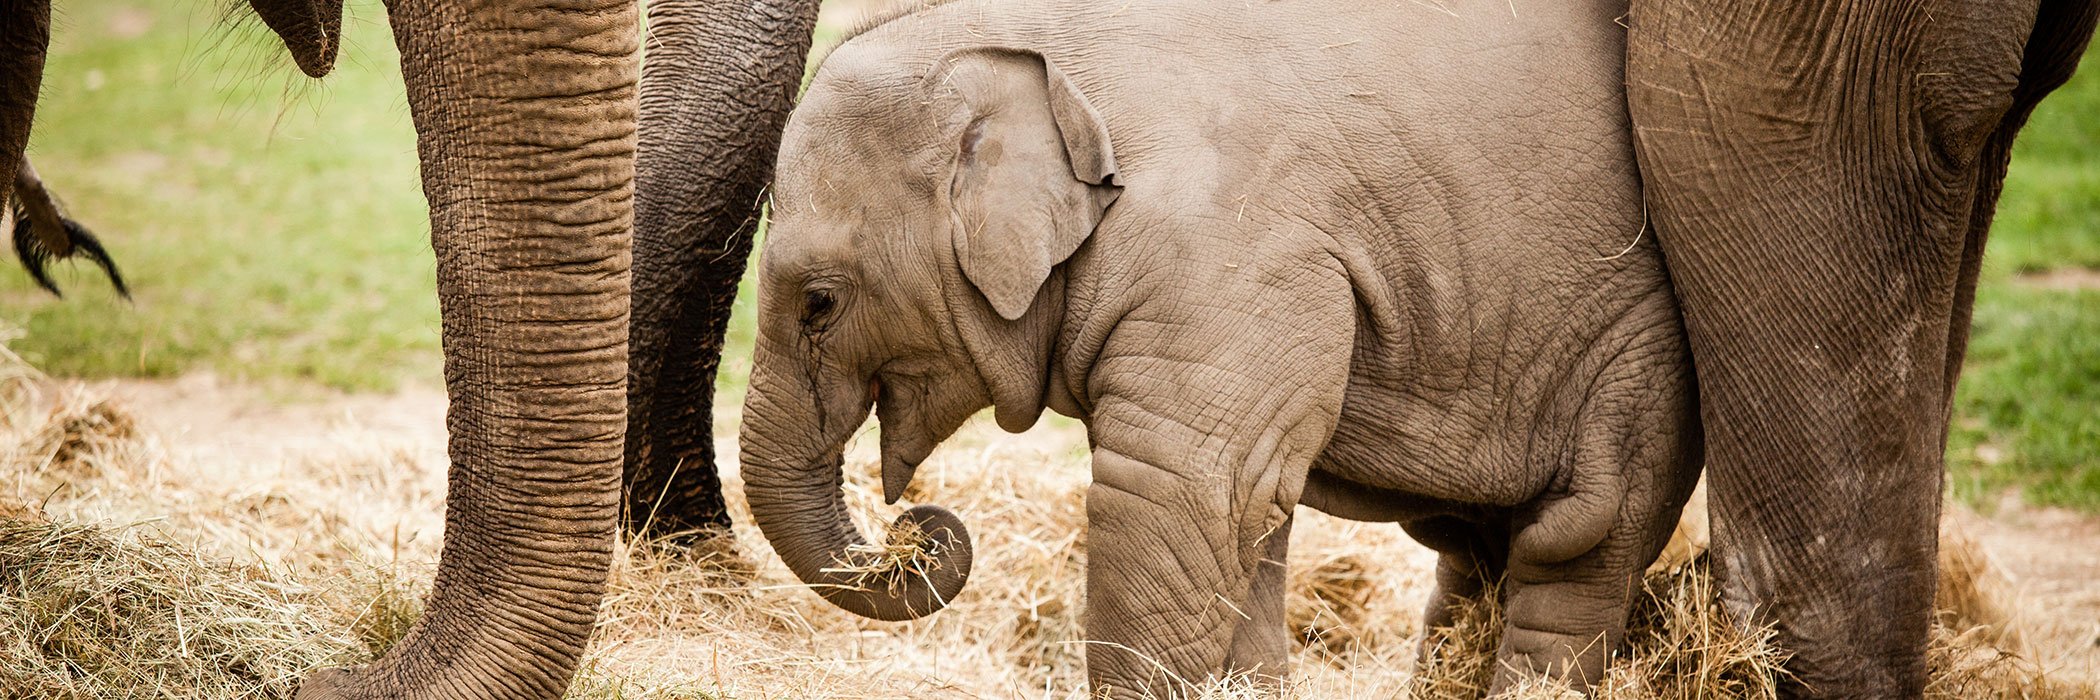 Baby elephant wiht her mother